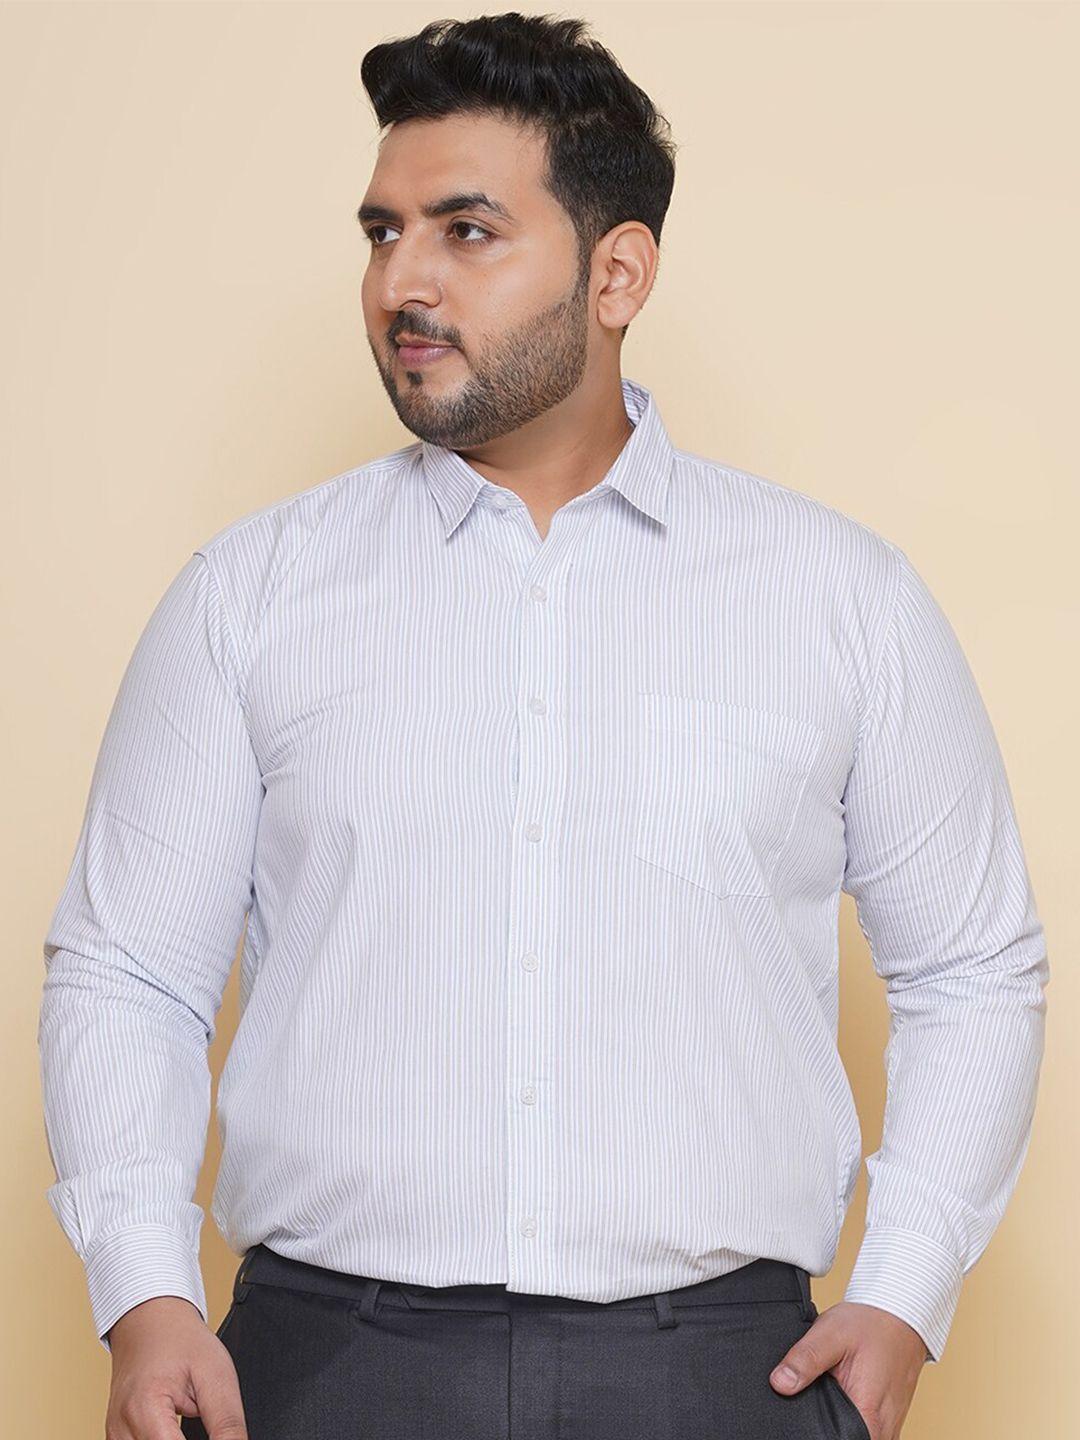 john pride plus size vertical striped pure cotton shirt